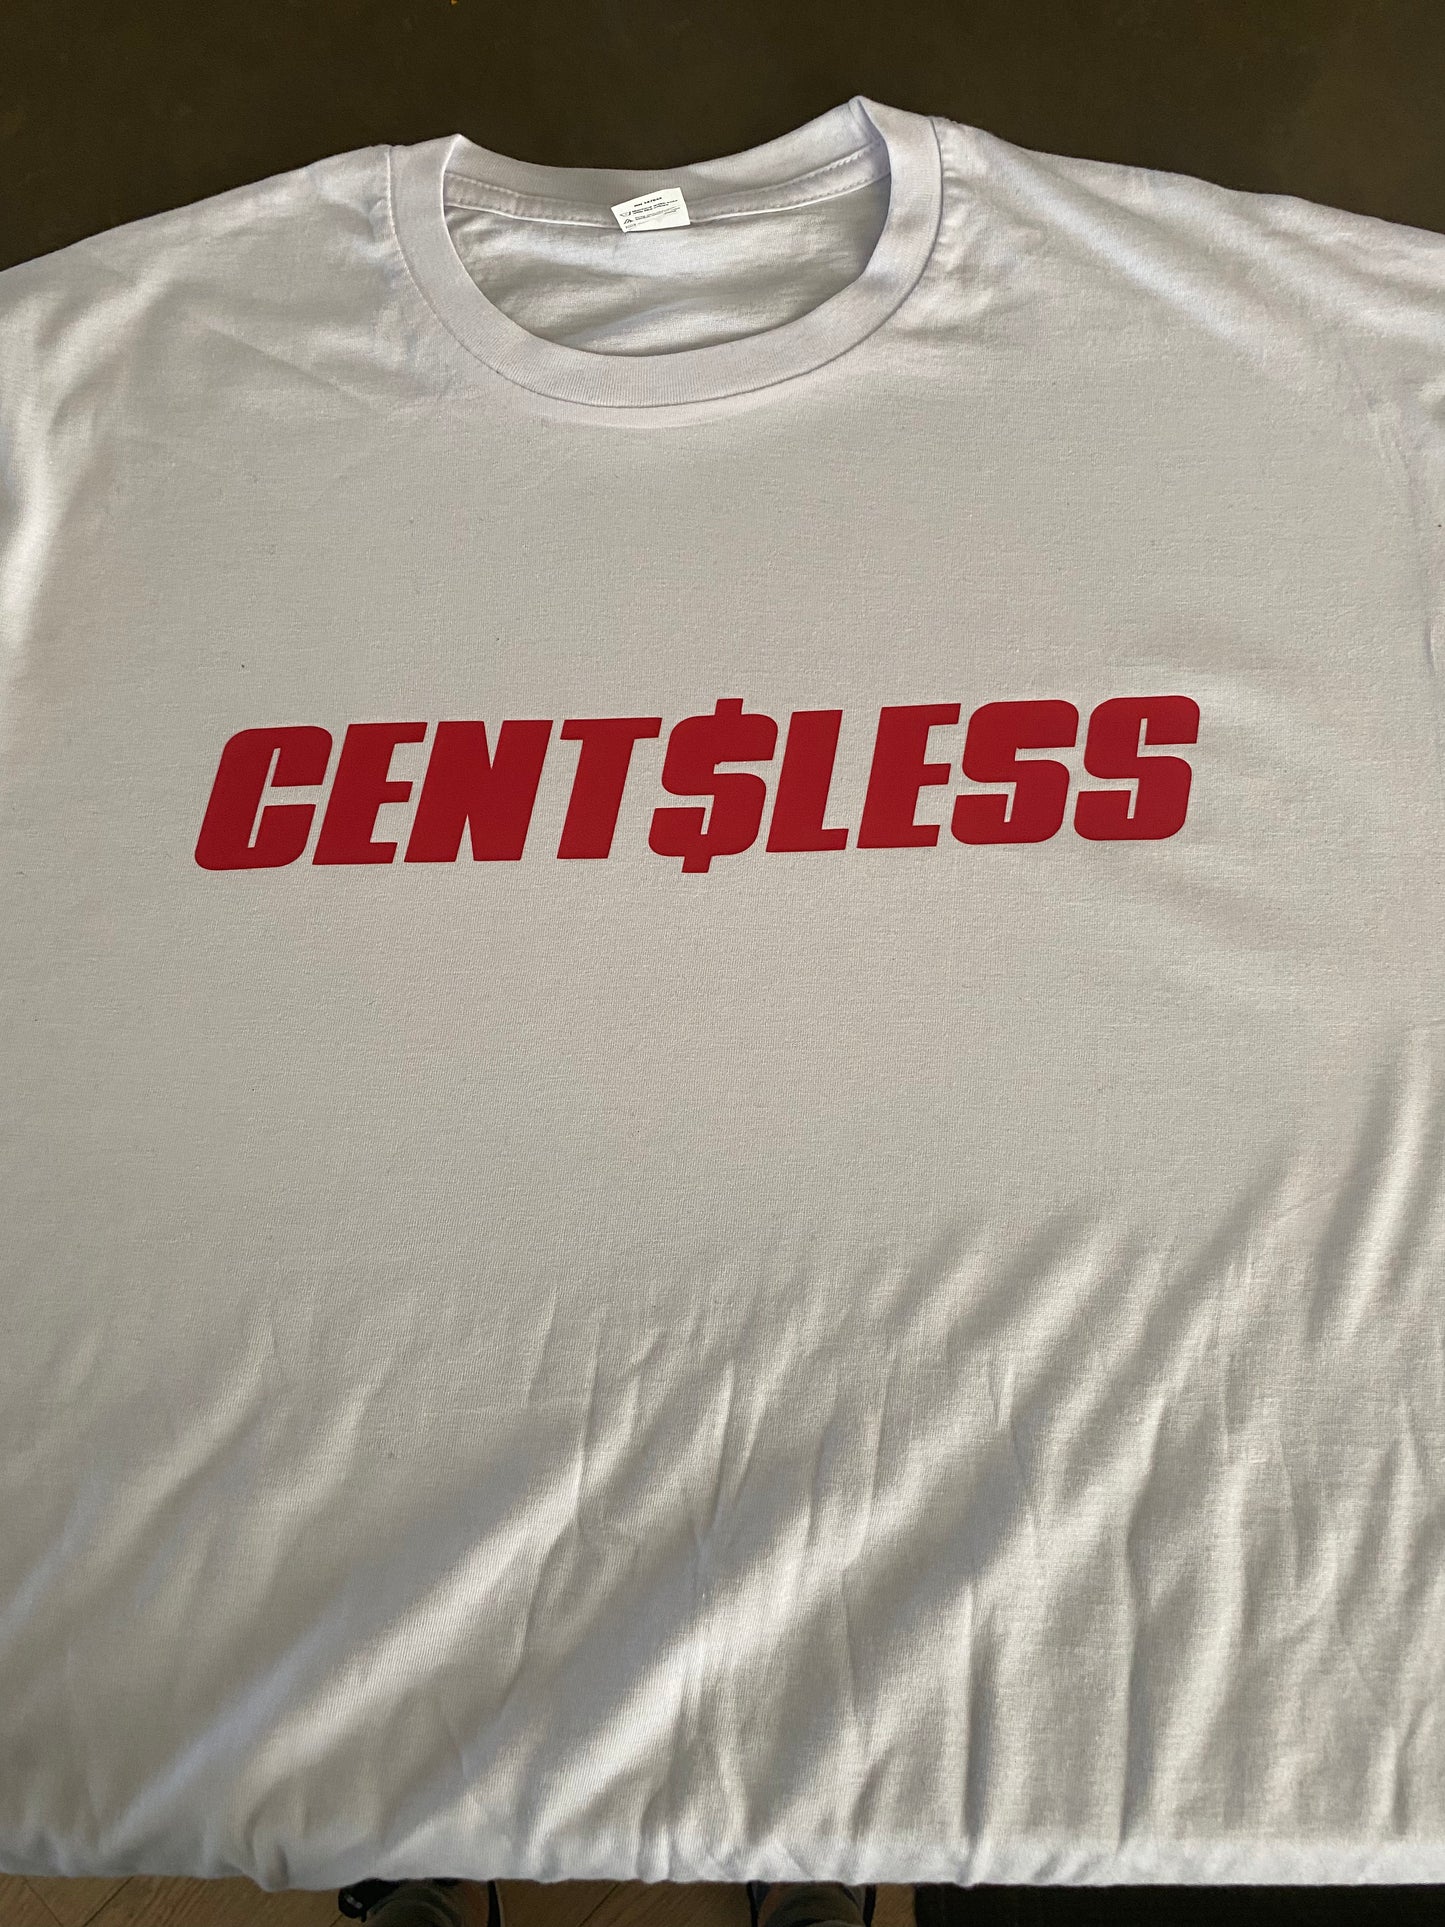 CentsLess white t-shirt